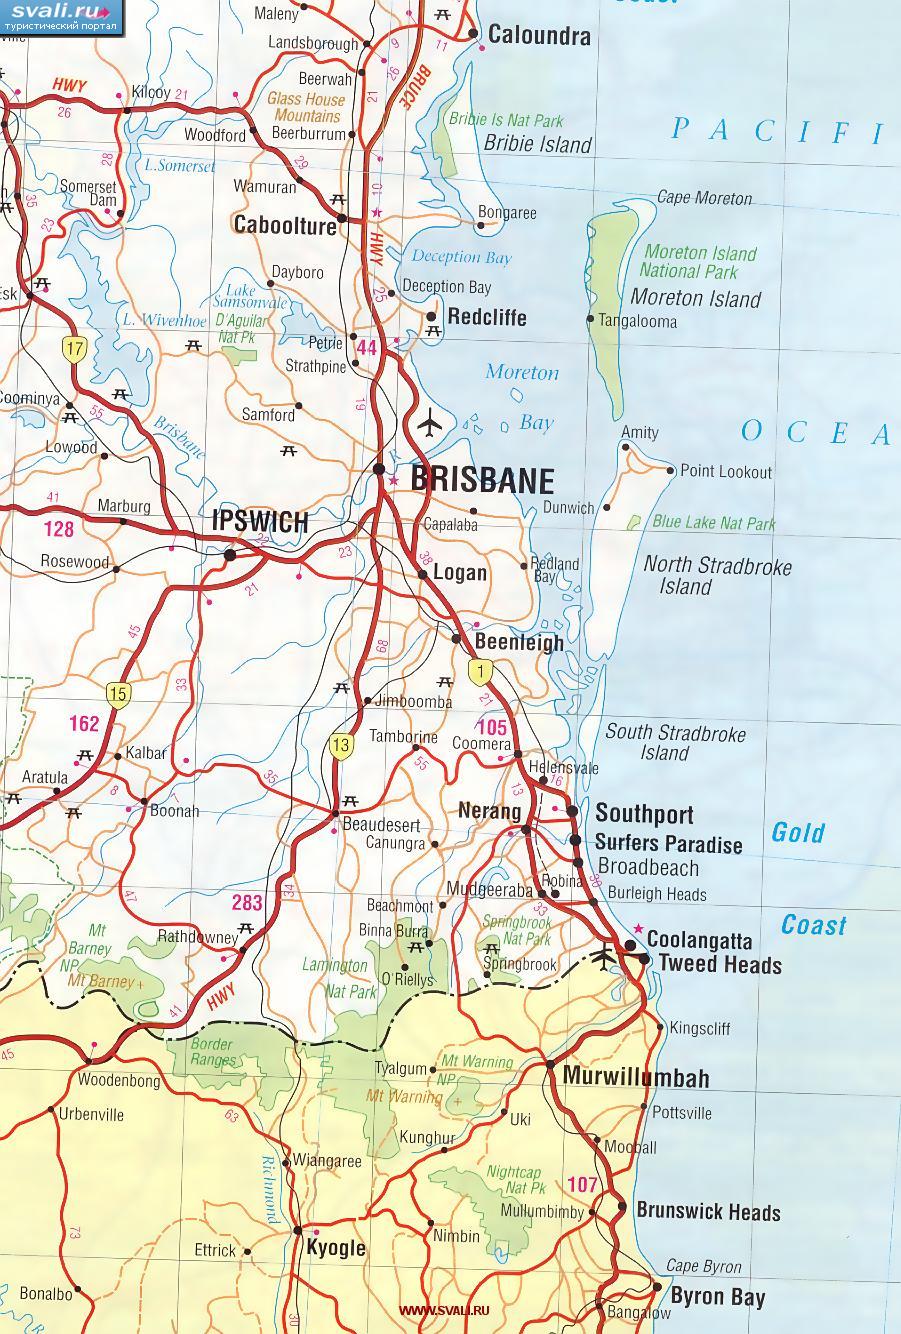 Карта окрестностей Брисбена (Brisbane), побережье Gold Coast, Австралия (англ.)